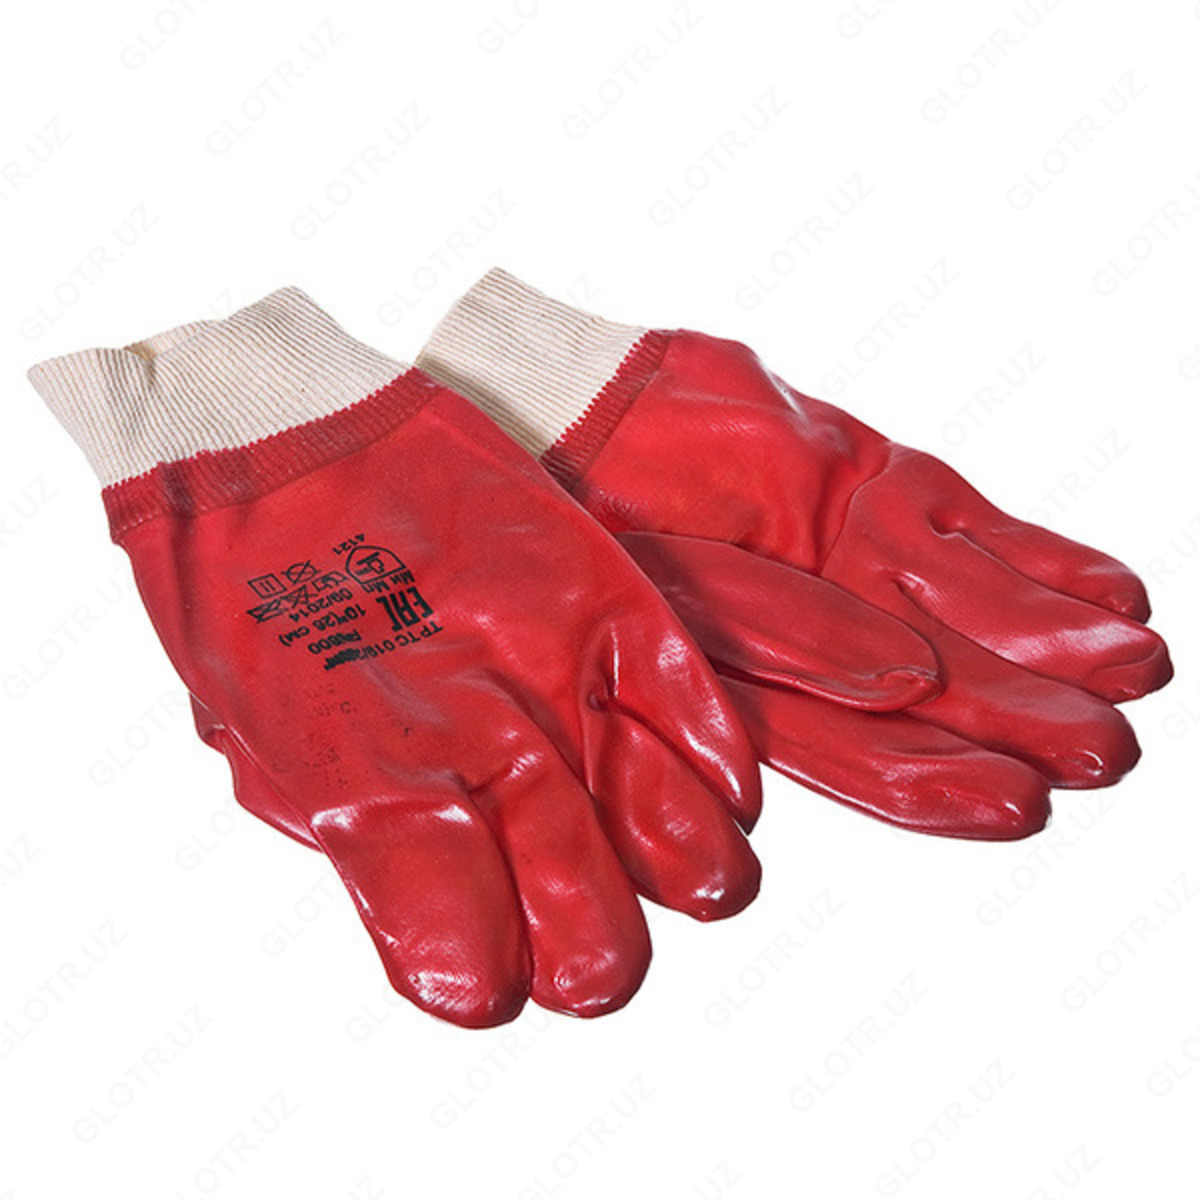 Резиновые перчатки облитые ПВХ манжета на резинке, цена 7 100 сум от .